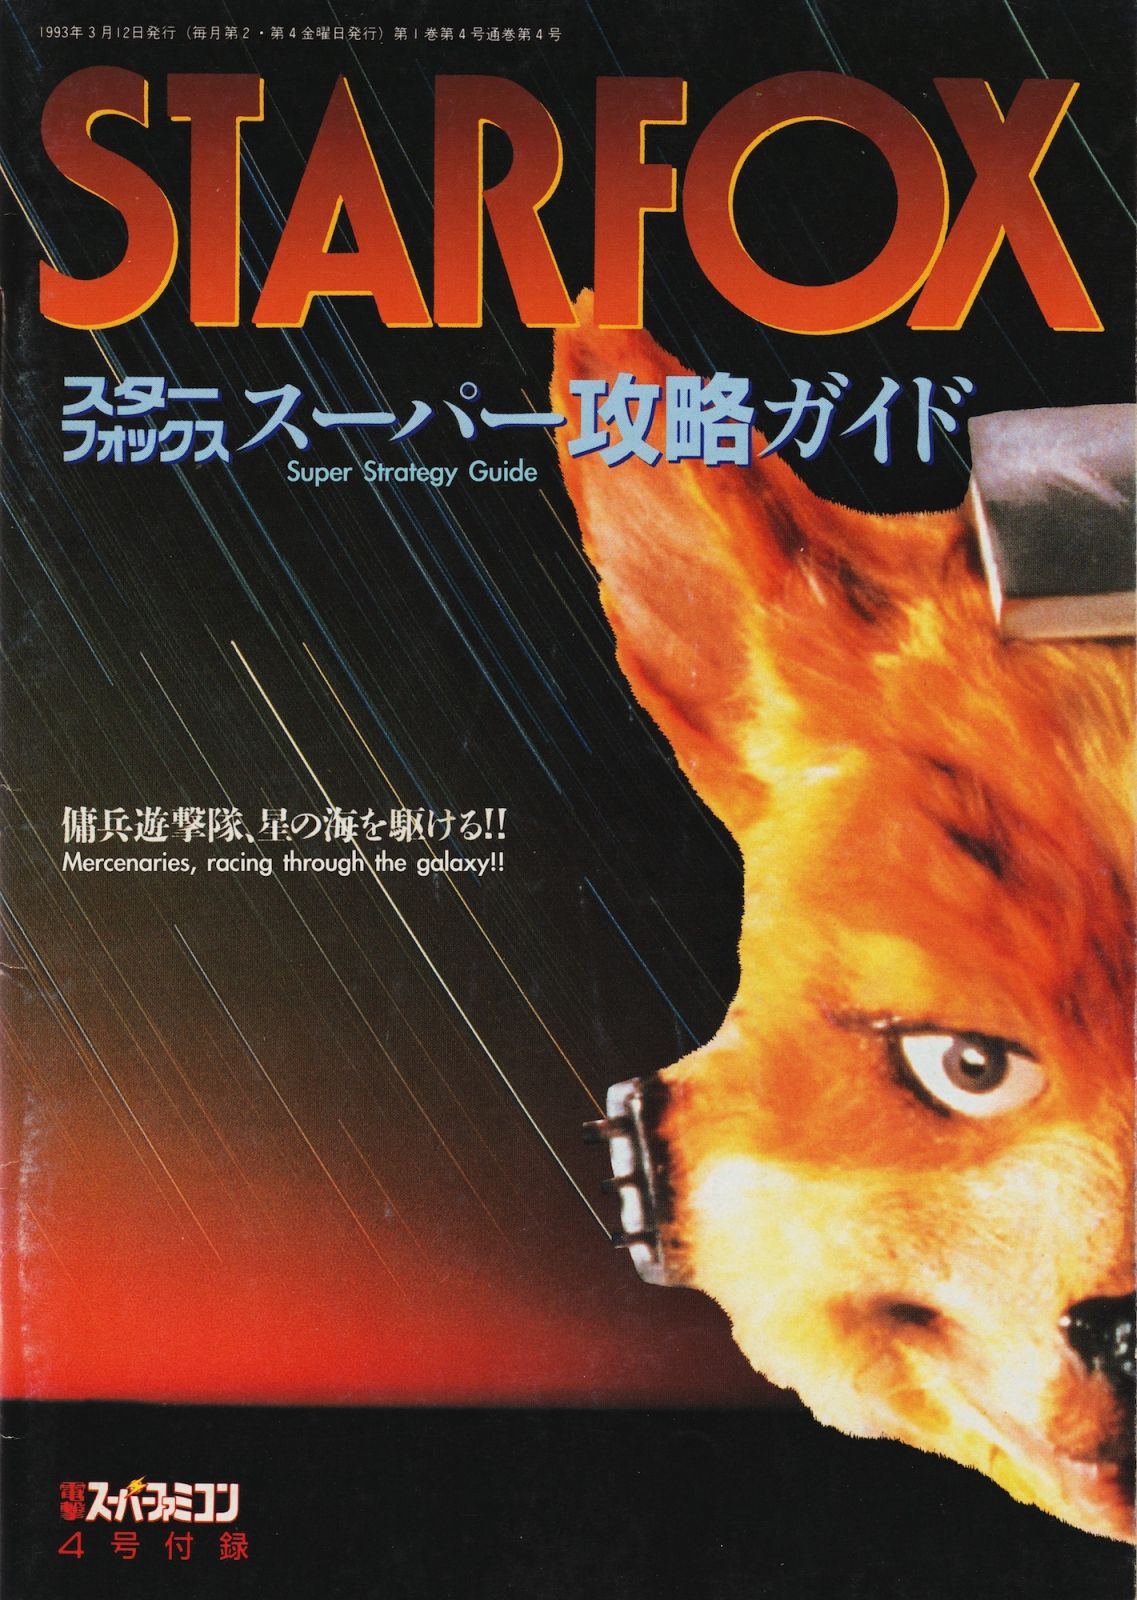 Star Fox Super Capture Guide cover 0